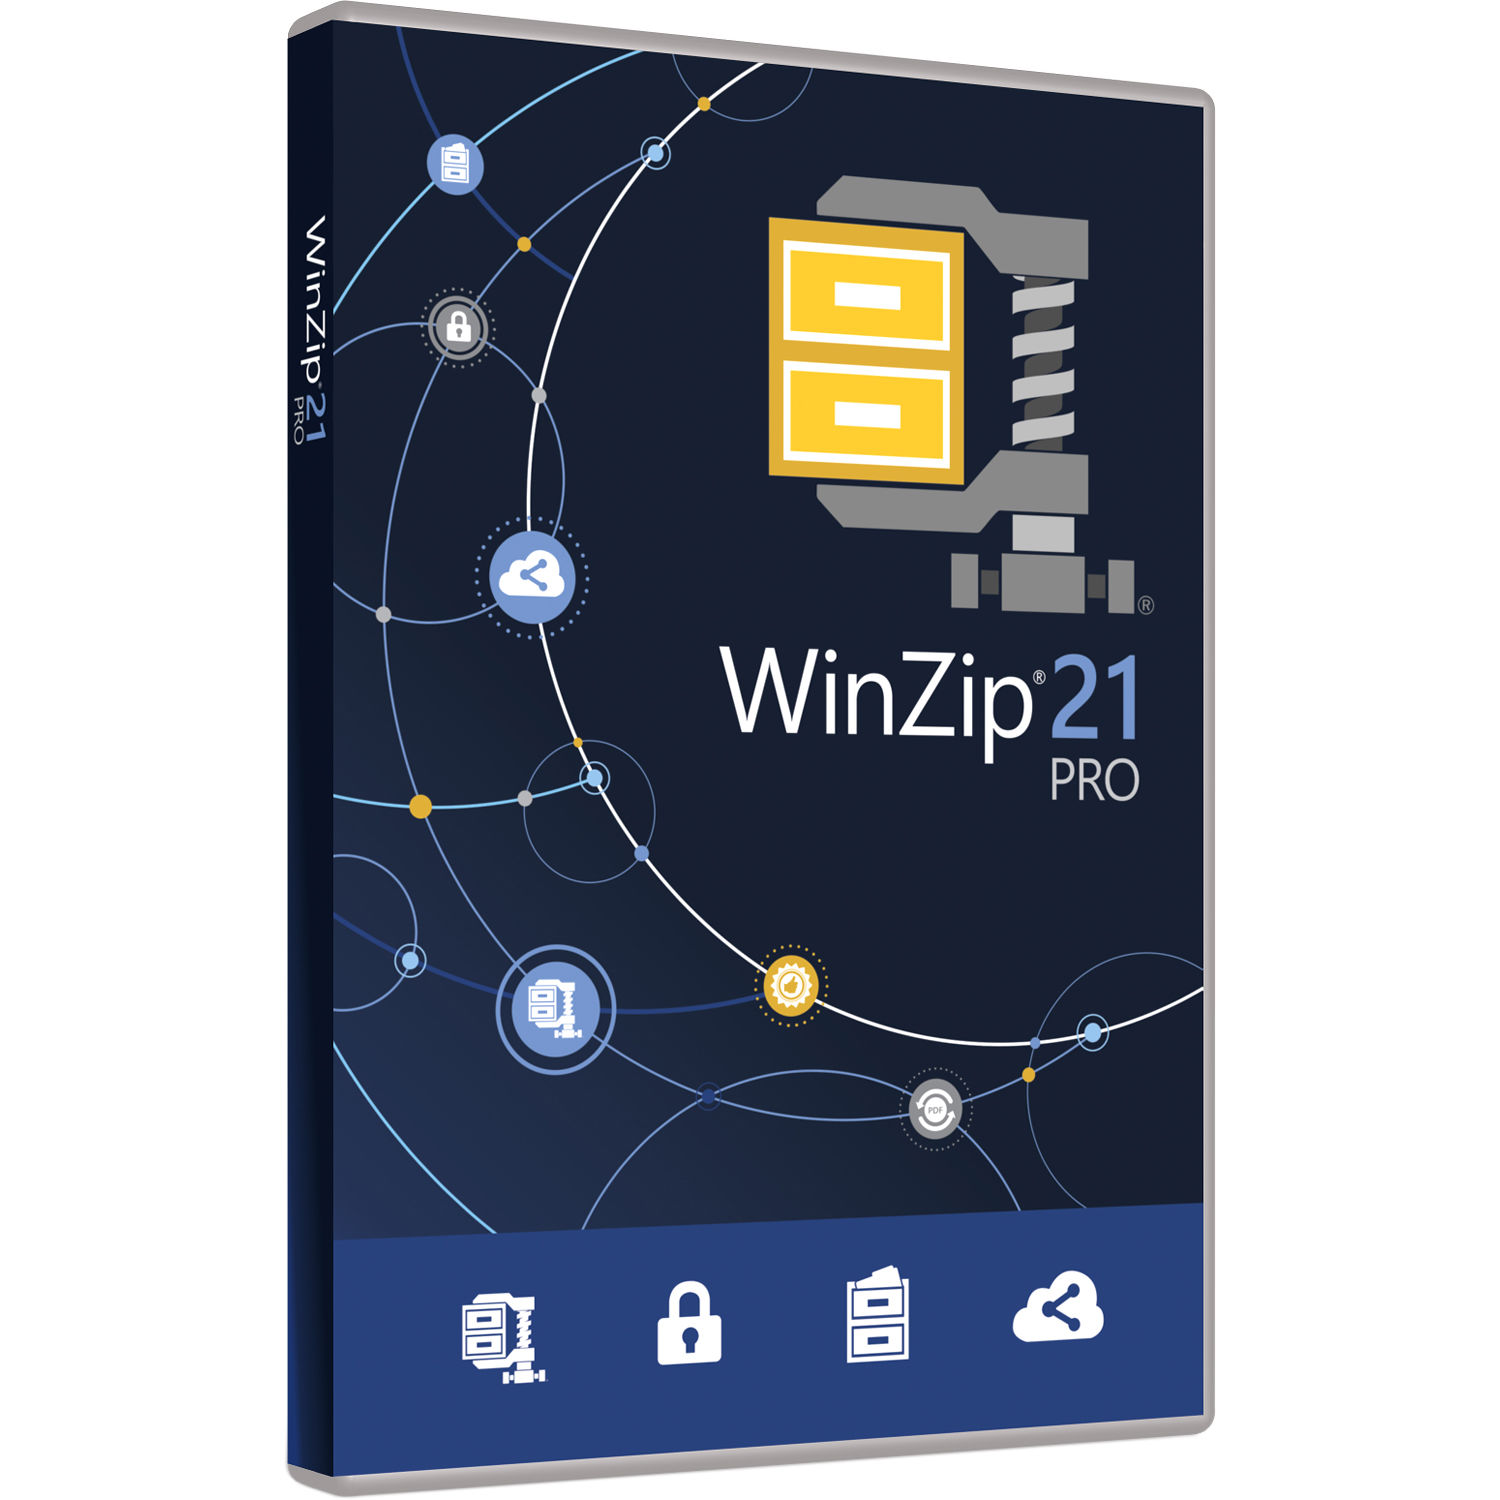 free download winzip for windows 7 32bit